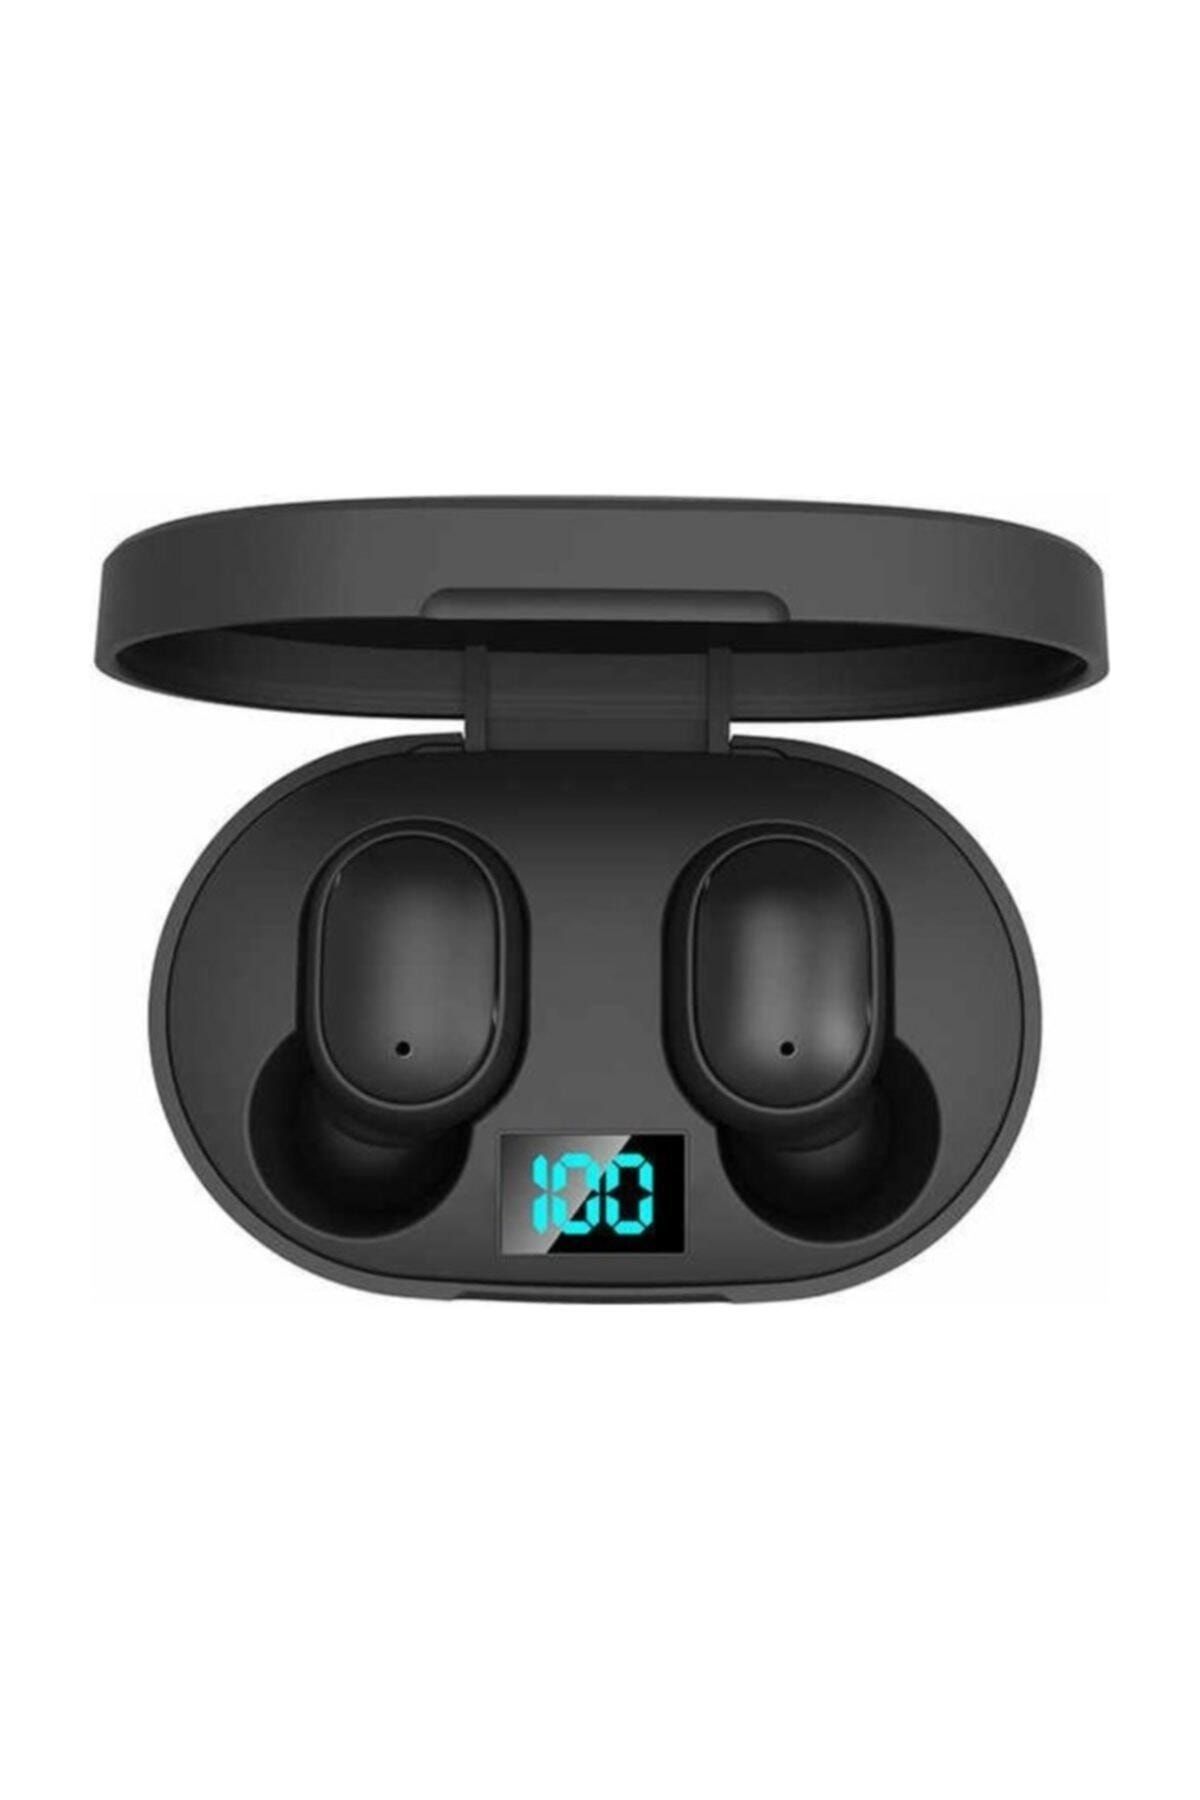 Renksan TRUE E6S Şarj Gösterge Kutulu Air Bluetooth Kulaklık E6s Şarj Gösterge Kutulu Air Bluetooth Kulaklık